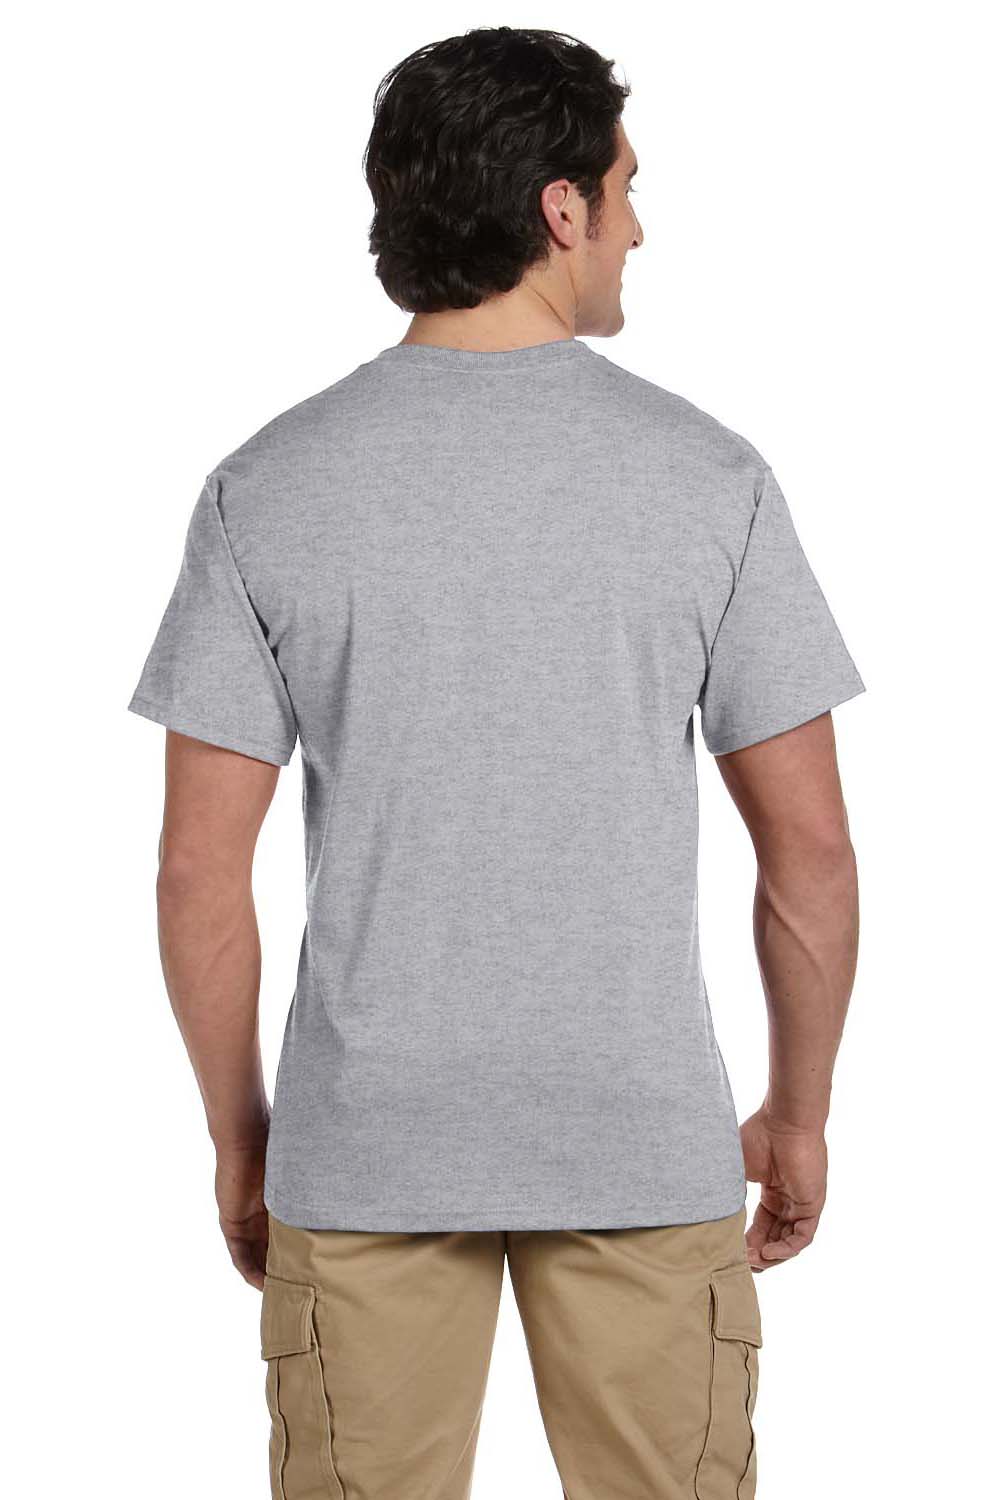 Jerzees 29P Mens Dri-Power Moisture Wicking Short Sleeve Crewneck T-Shirt w/ Pocket Oxford Grey Back